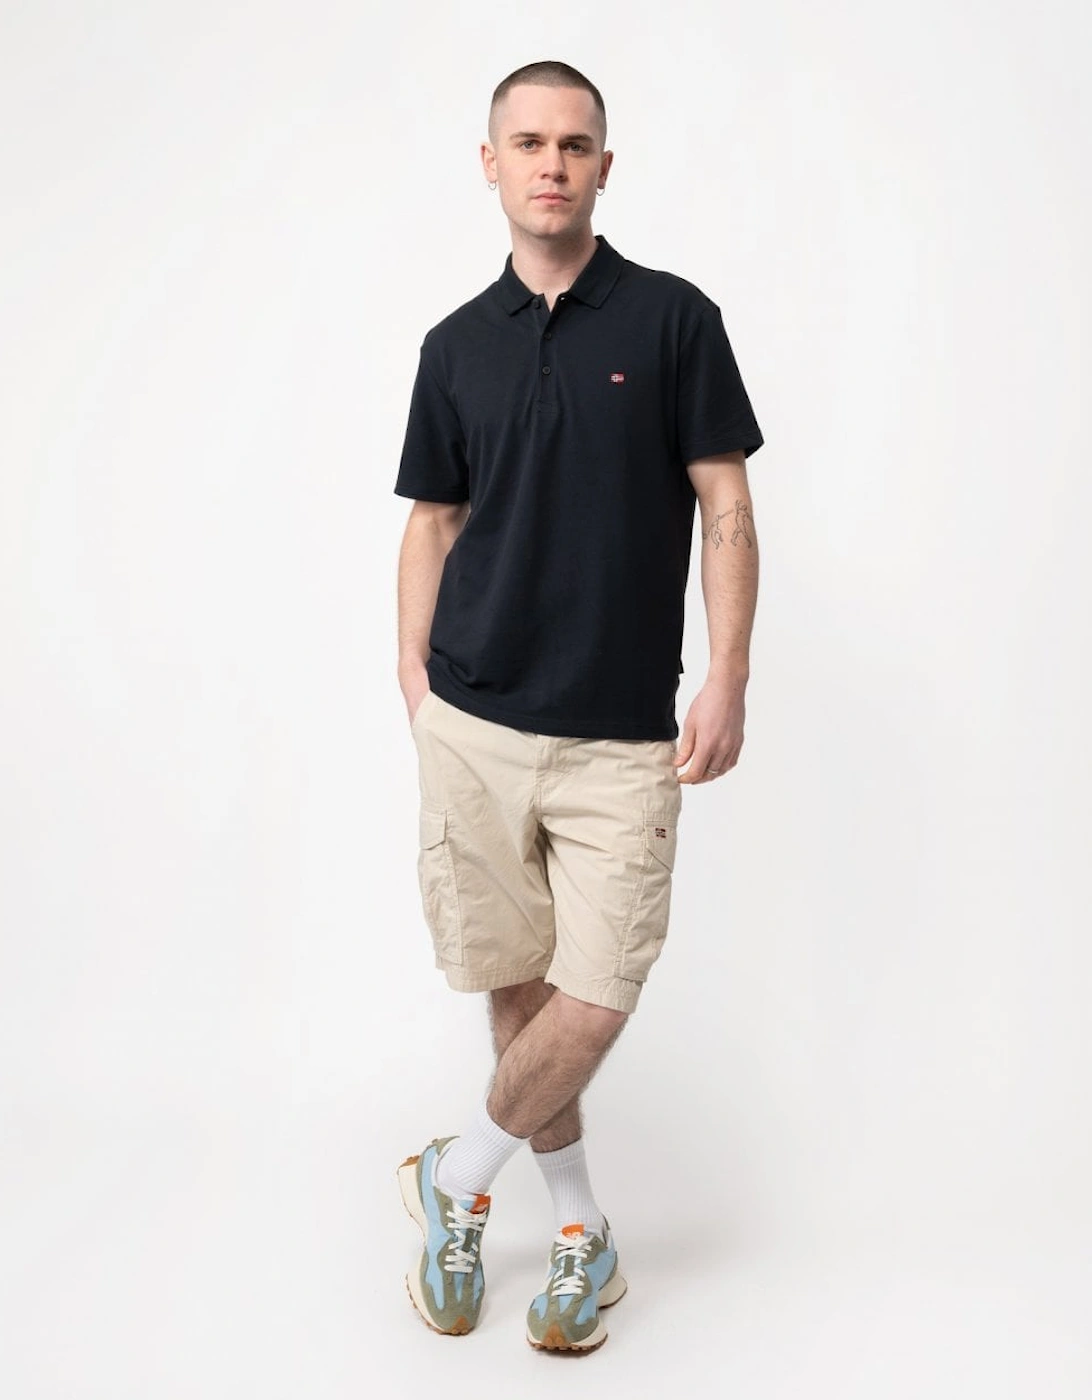 Ealis Sum Mens Short Sleeve Polo Shirt